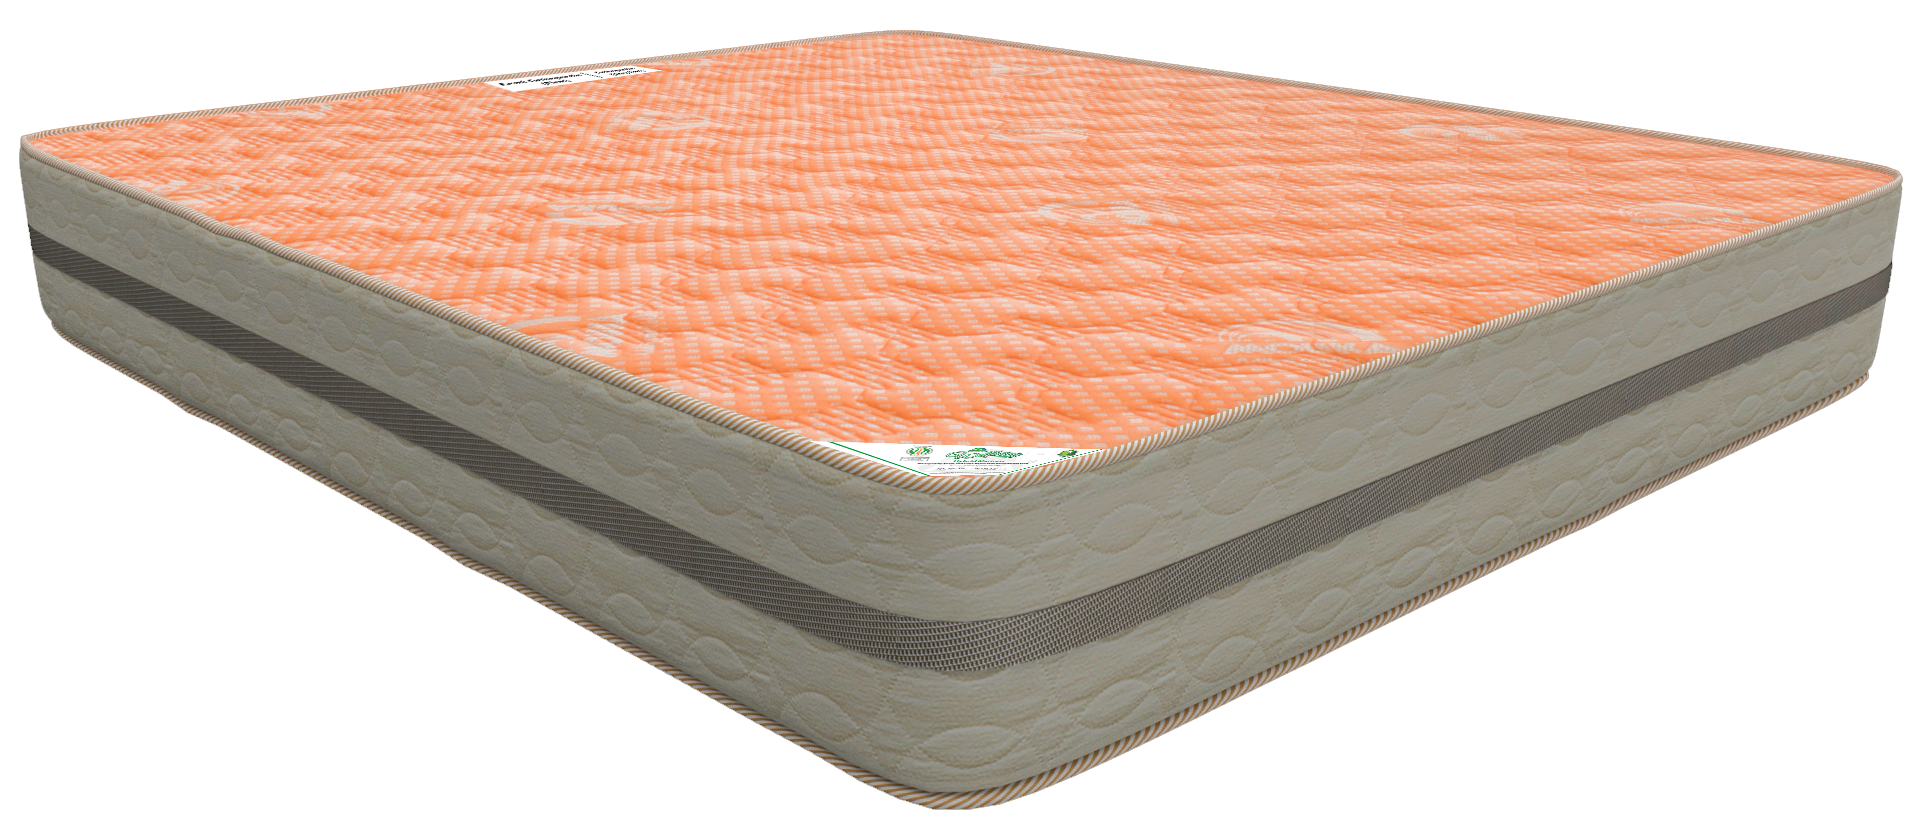 mouka foam mattress price list in nigeria